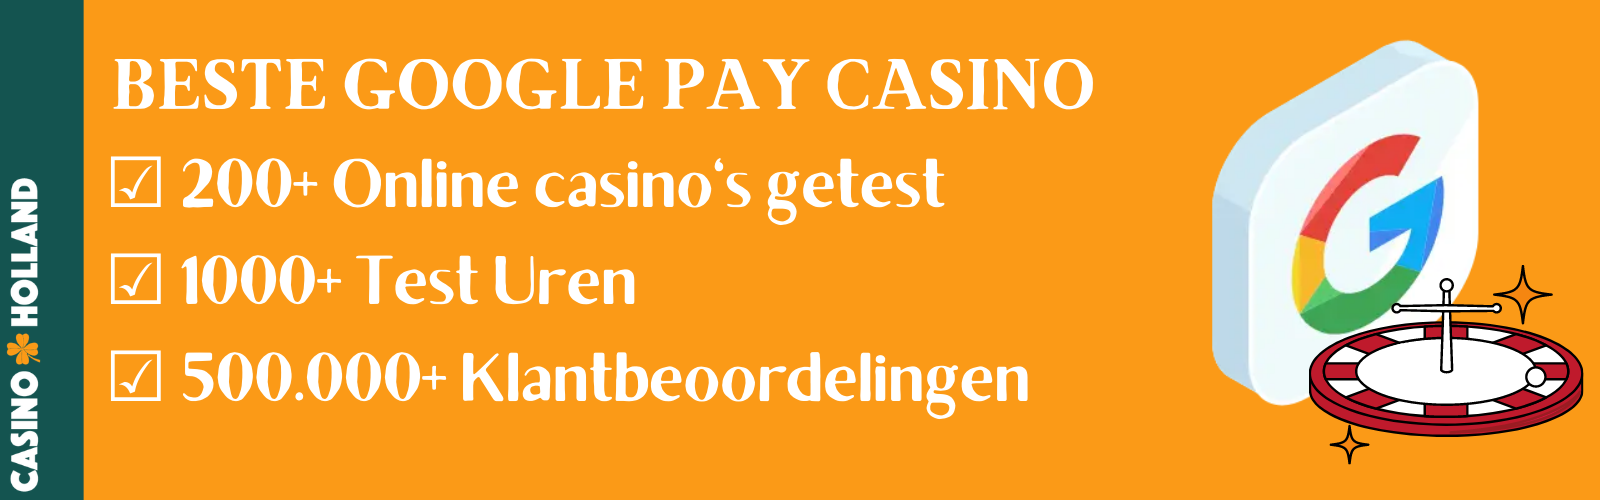 Beste Google Pay Casino